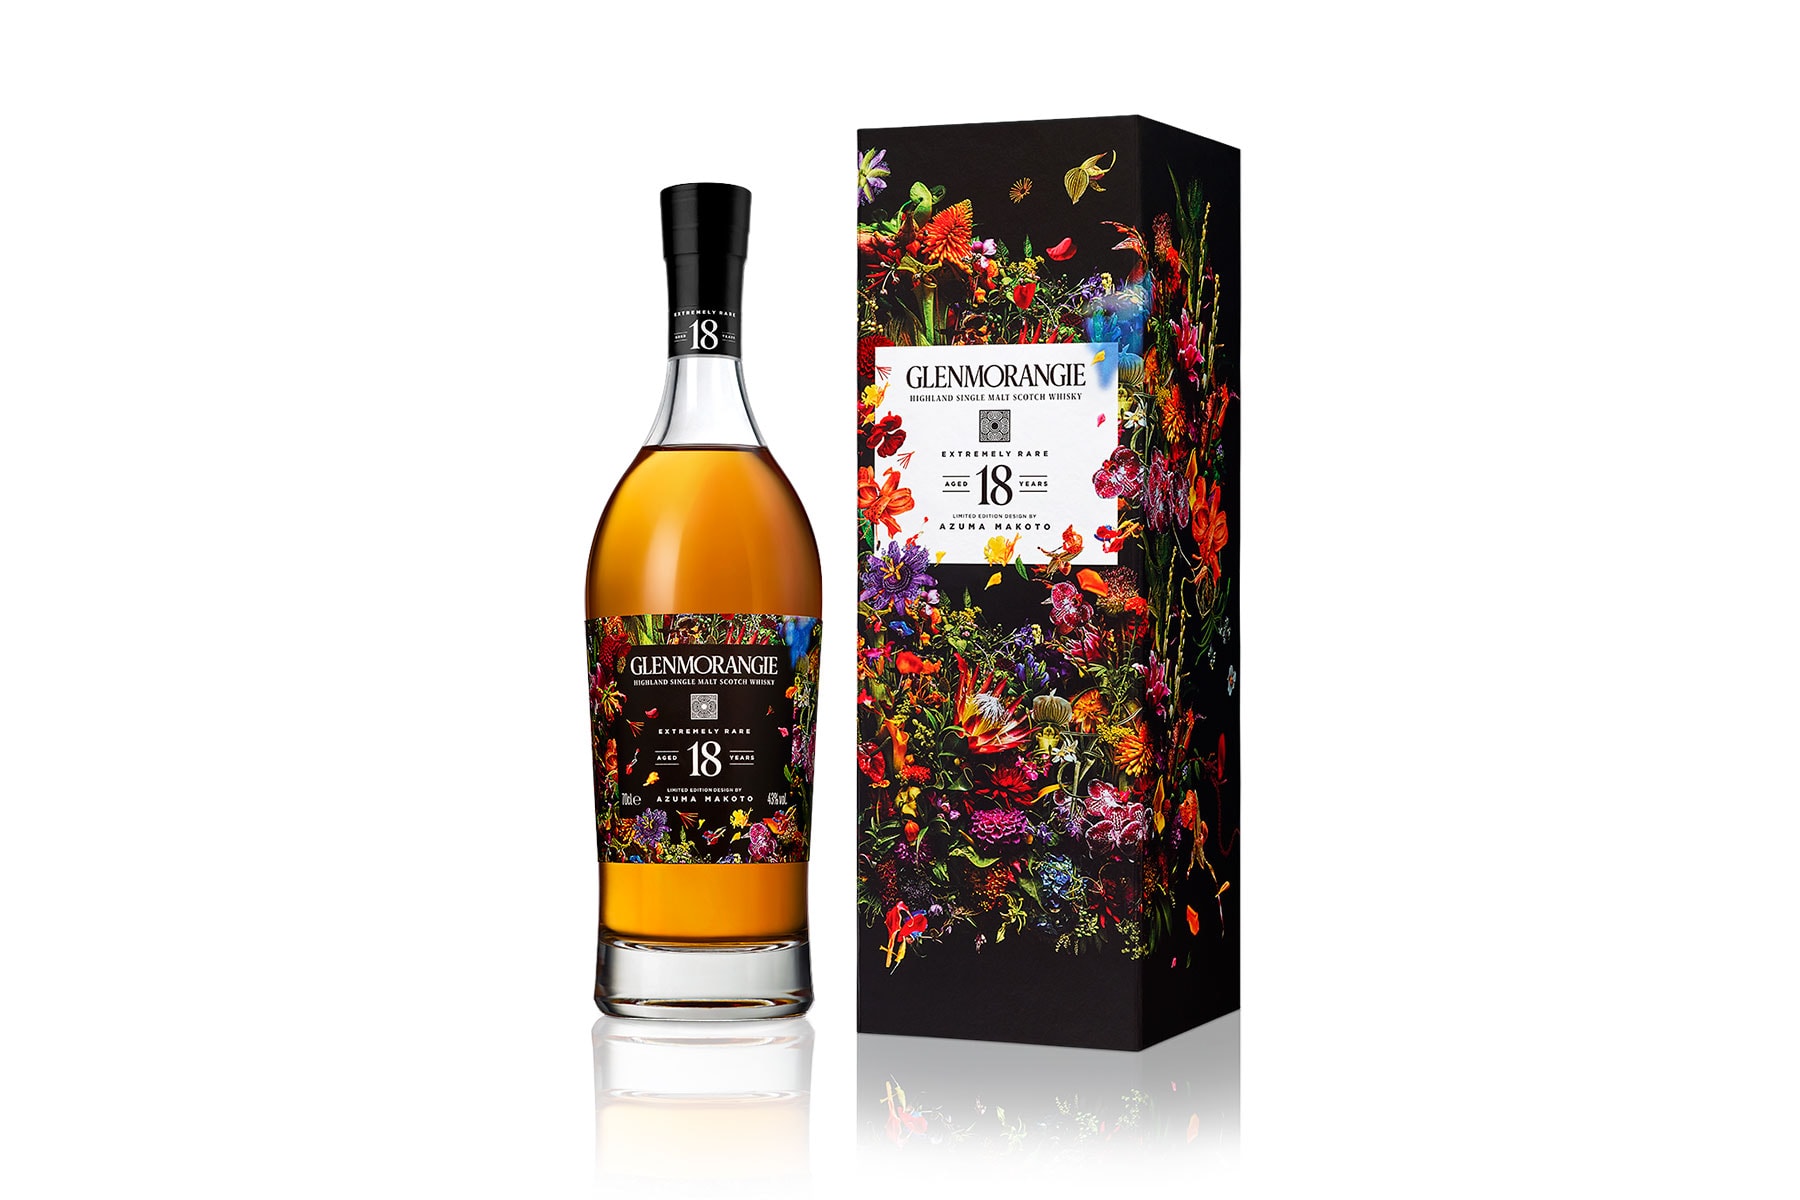 Azuma Makoto Glenmorangie Limited Edition Single Malt whiskey Japan flower bloom whiskey whisky drinks art 